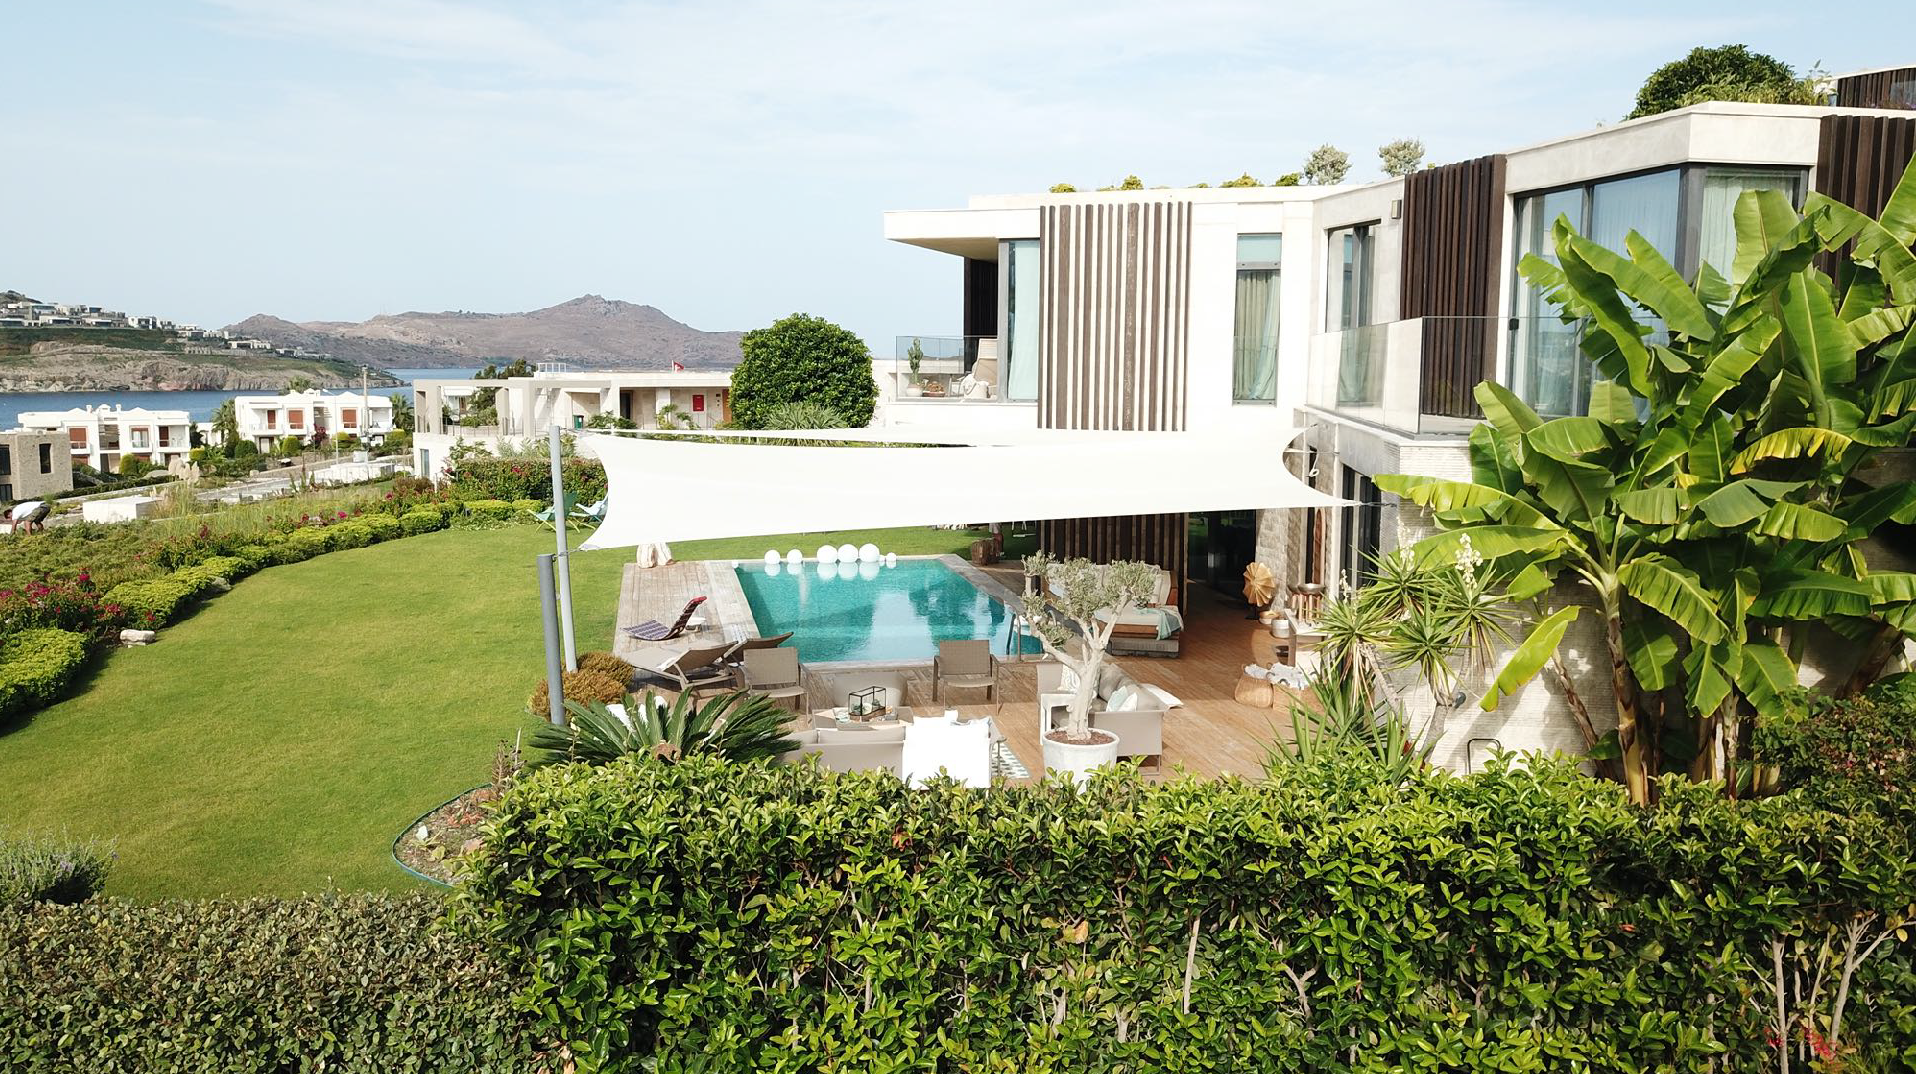 Luxury Villa For Sale In Bodrum